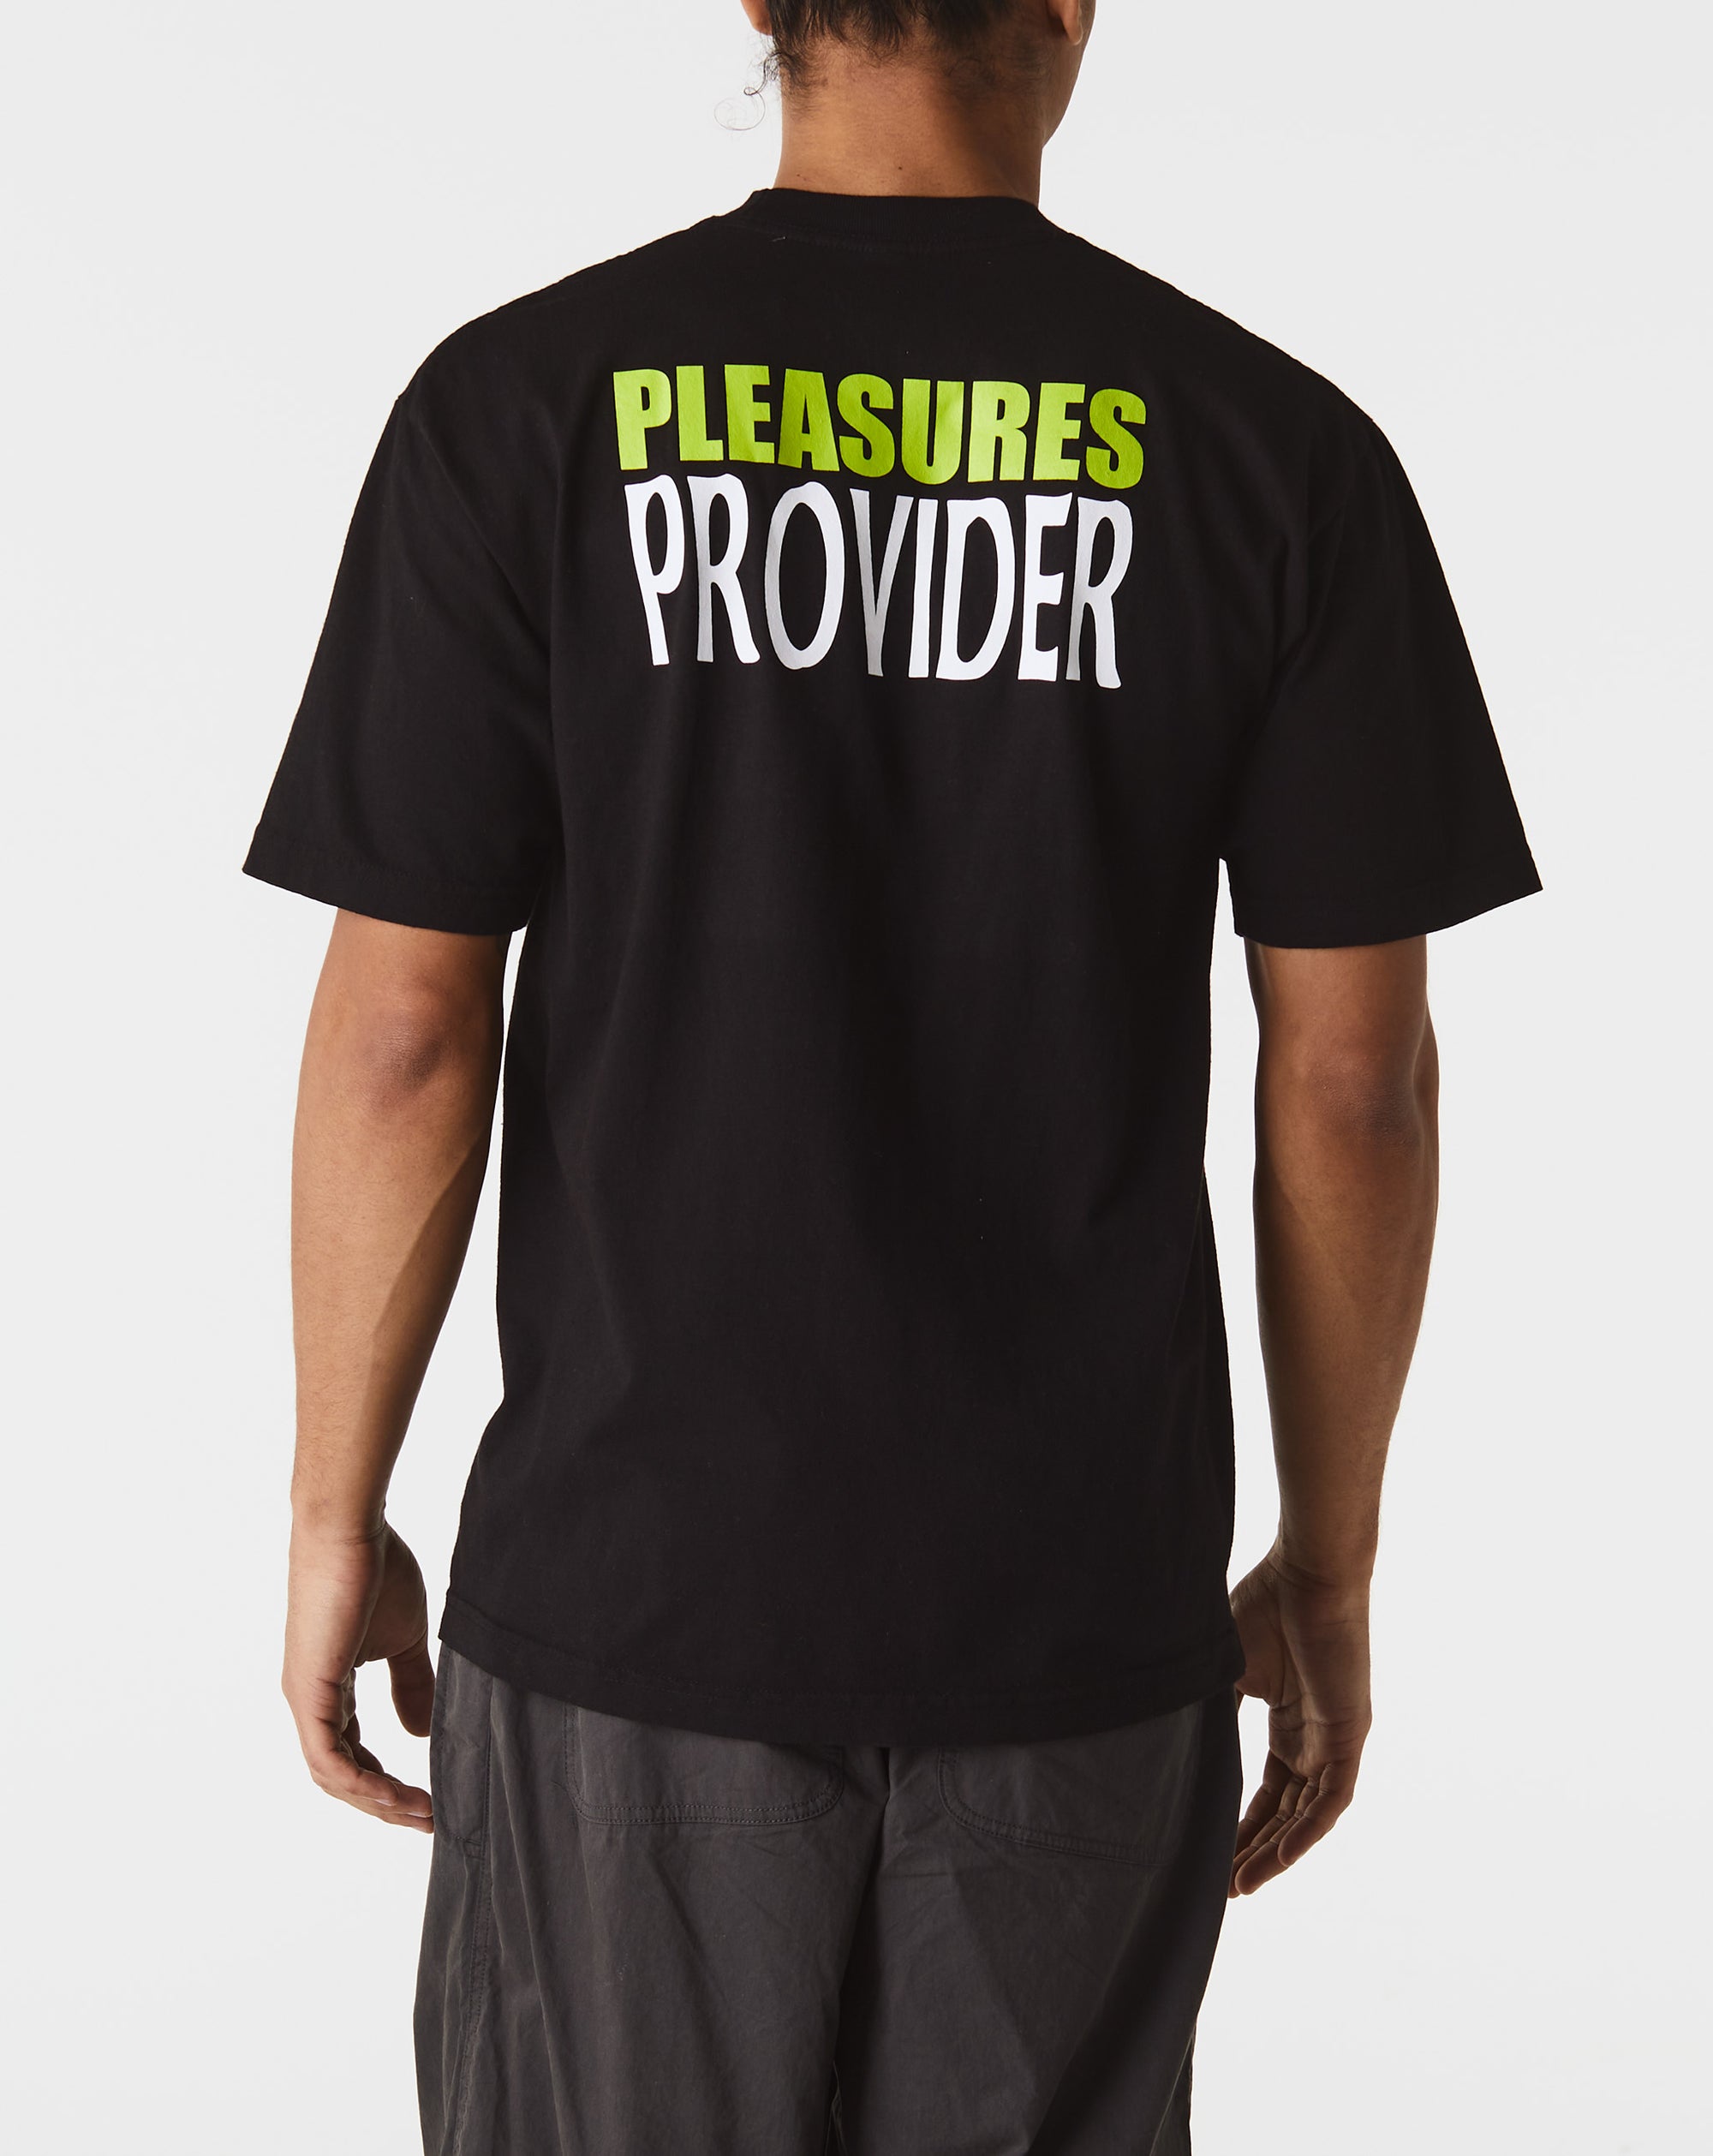 Pleasures N.E.R.D. x Provider T-Shirt - Rule of Next Apparel